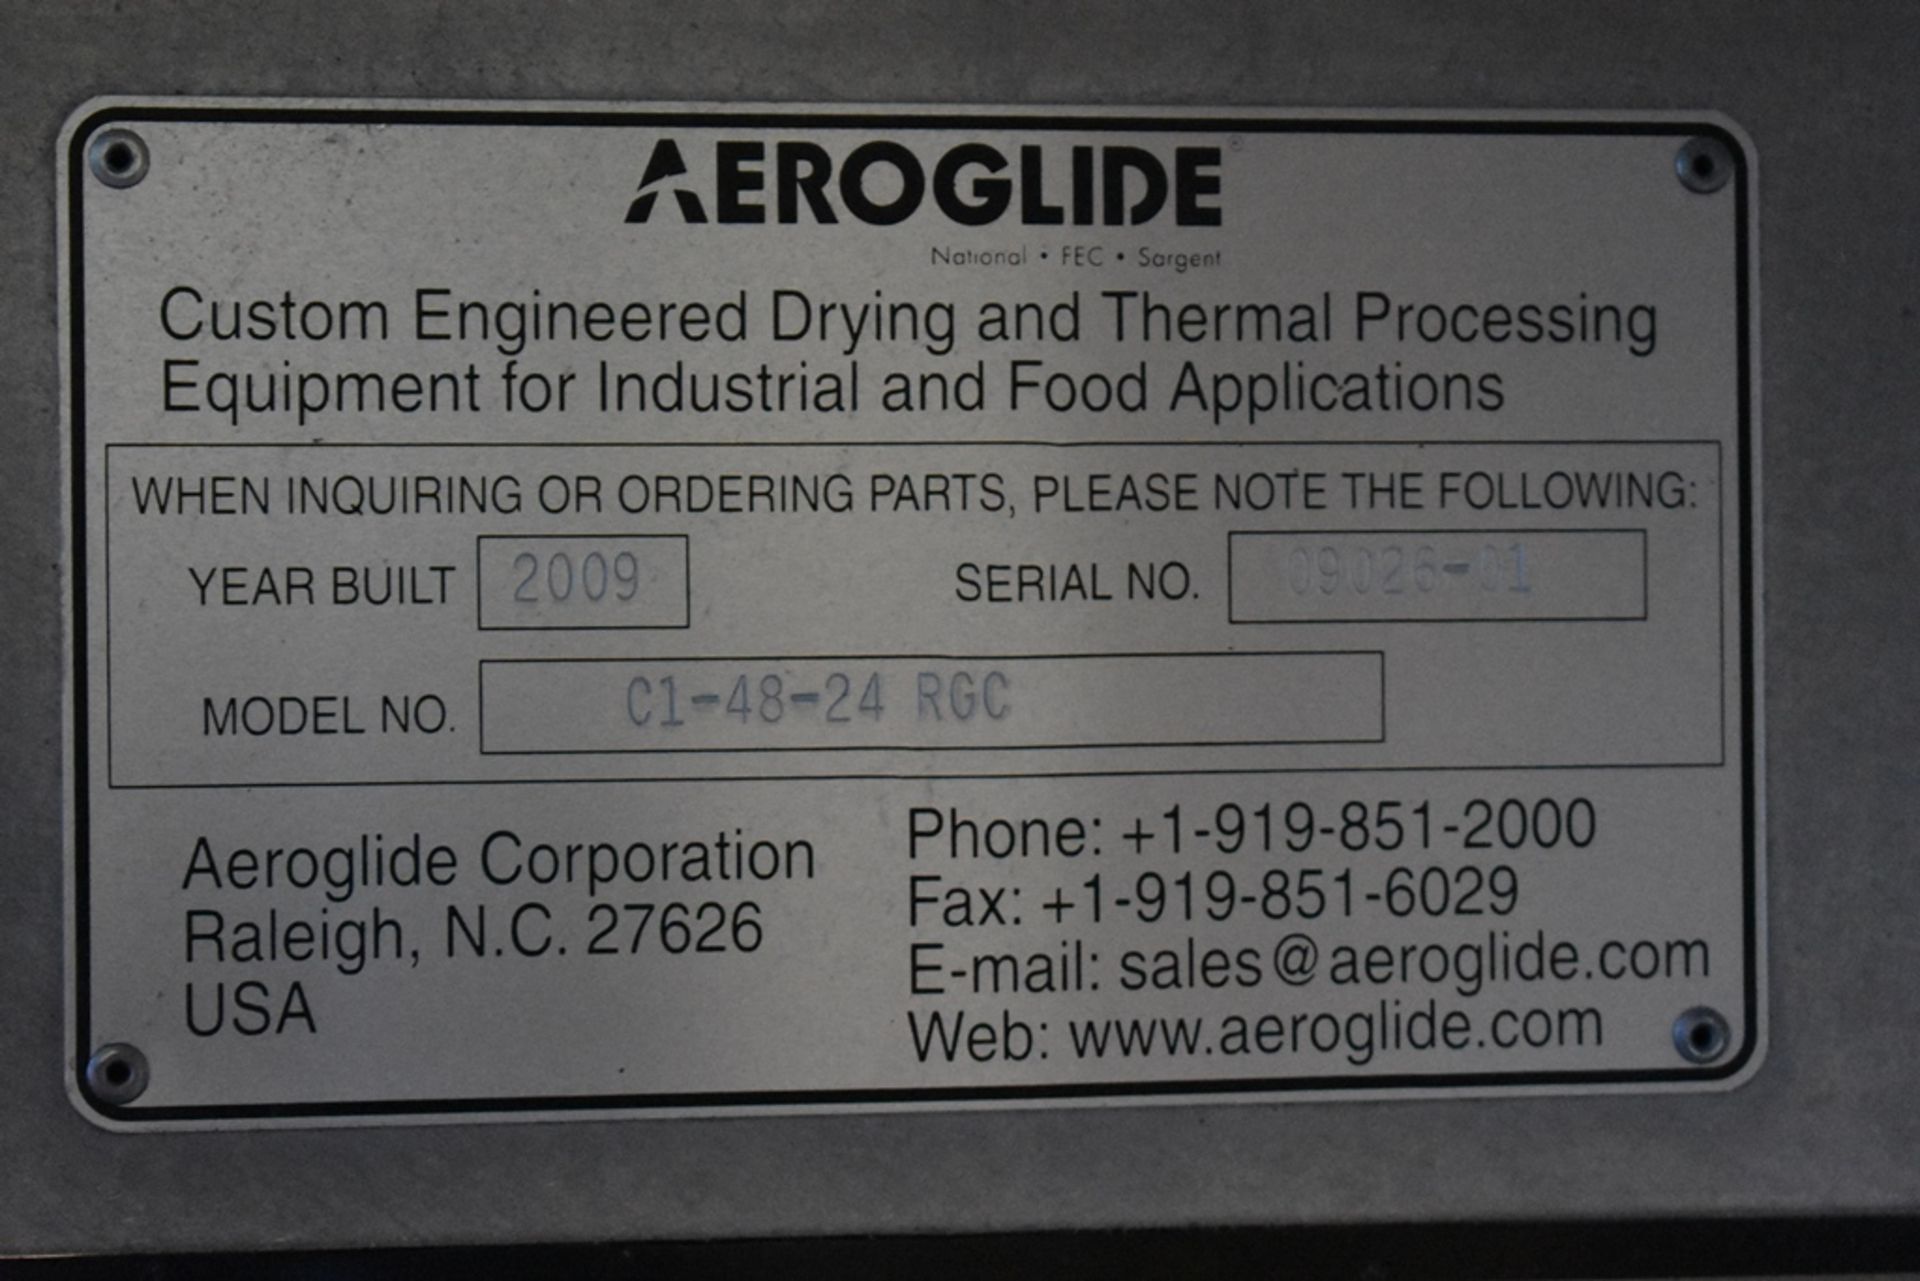 2009 AEROGLIDE Oven, Model C1-48-24 RGC, S/N 09026-01 Includes Mezzanine, Control Panel - Image 68 of 70